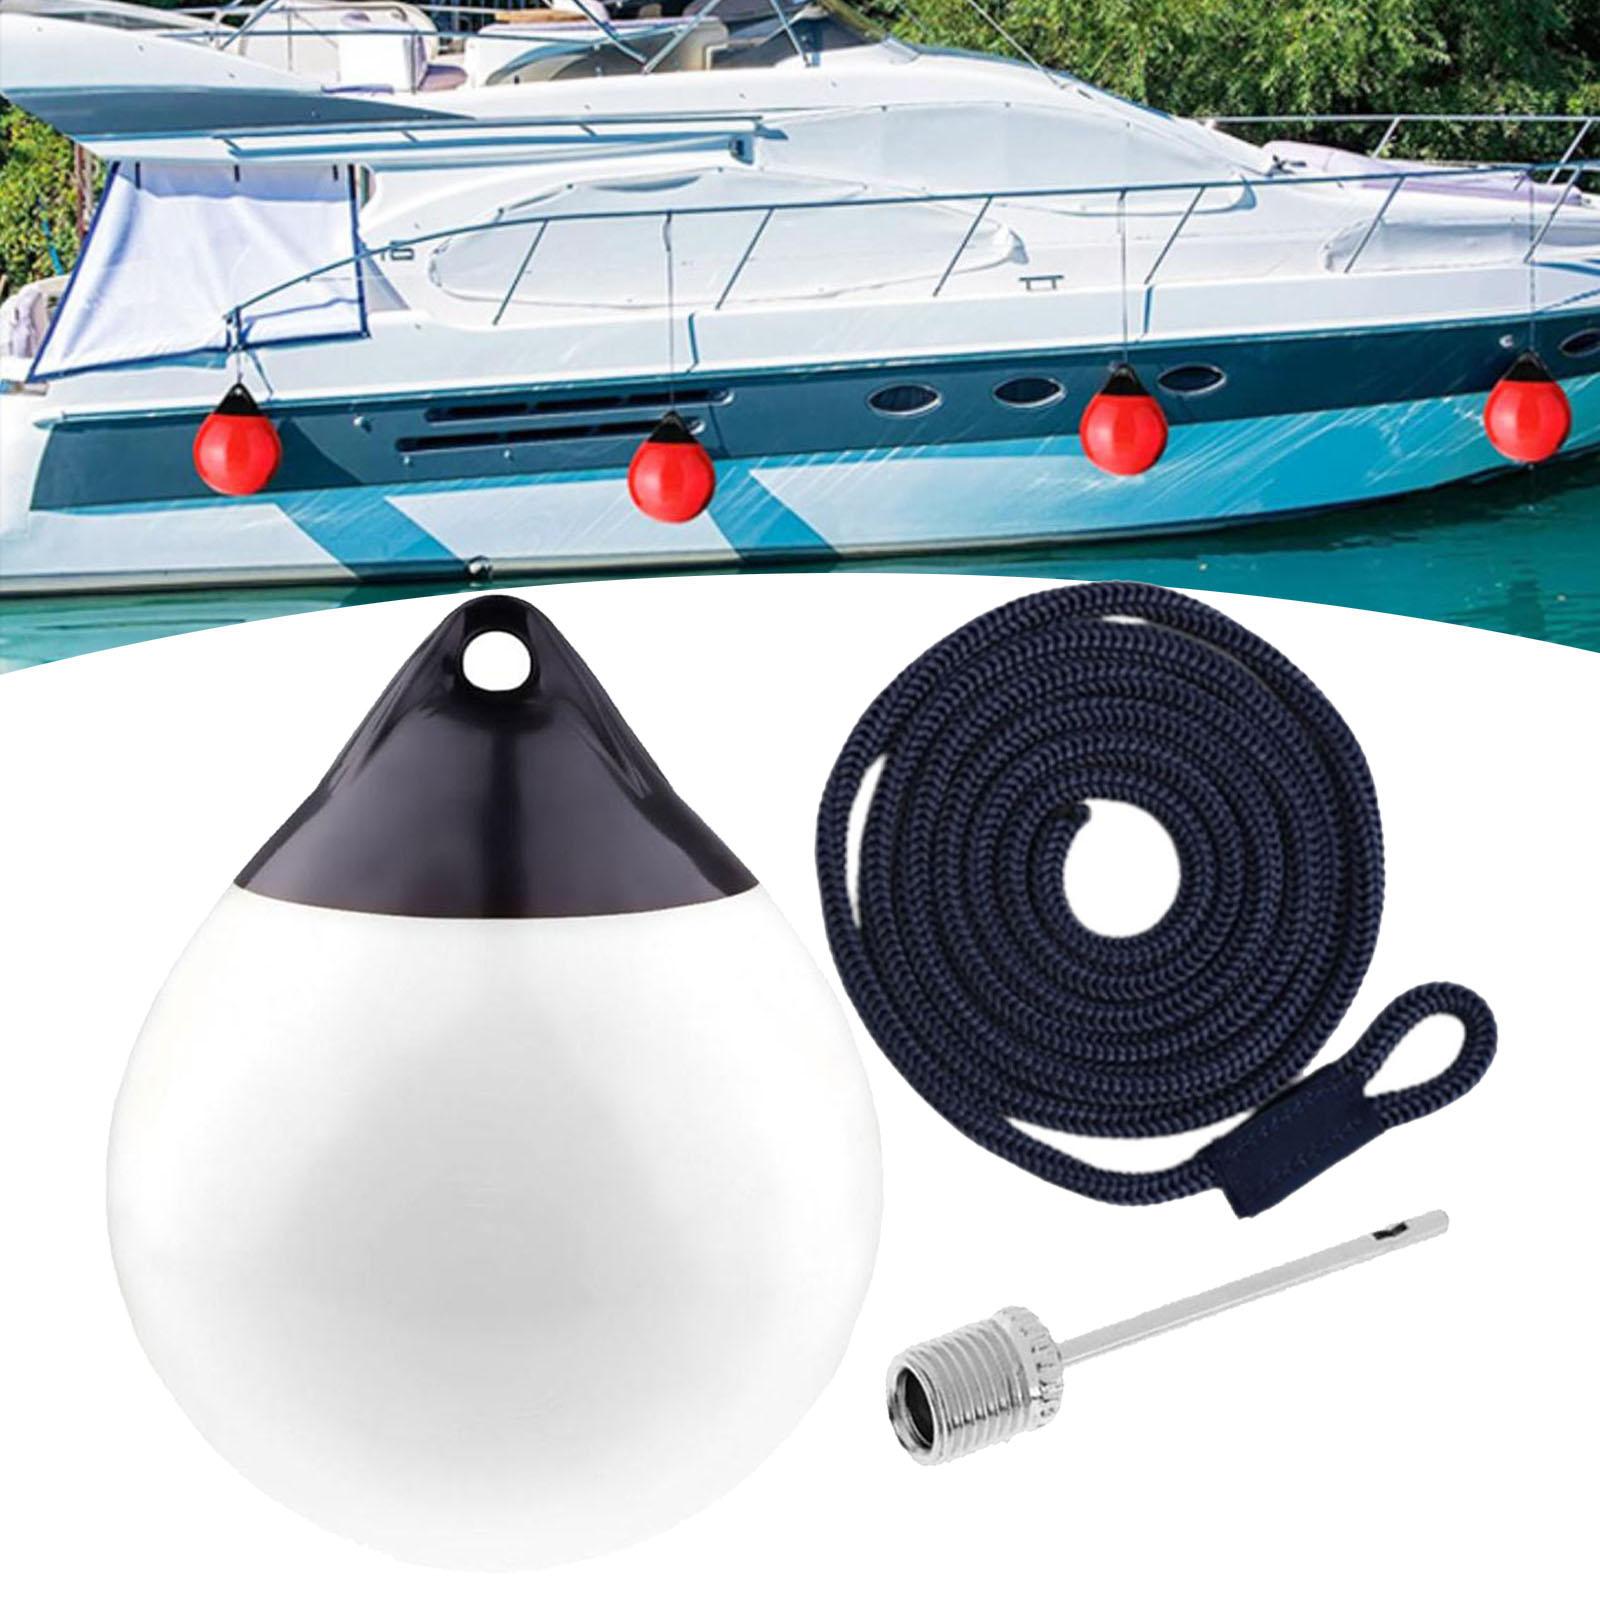 Boat Fender Ball Dock Edge Docking Anchor Buoy for Yacht Sailboats Row Boats White w Black Rope